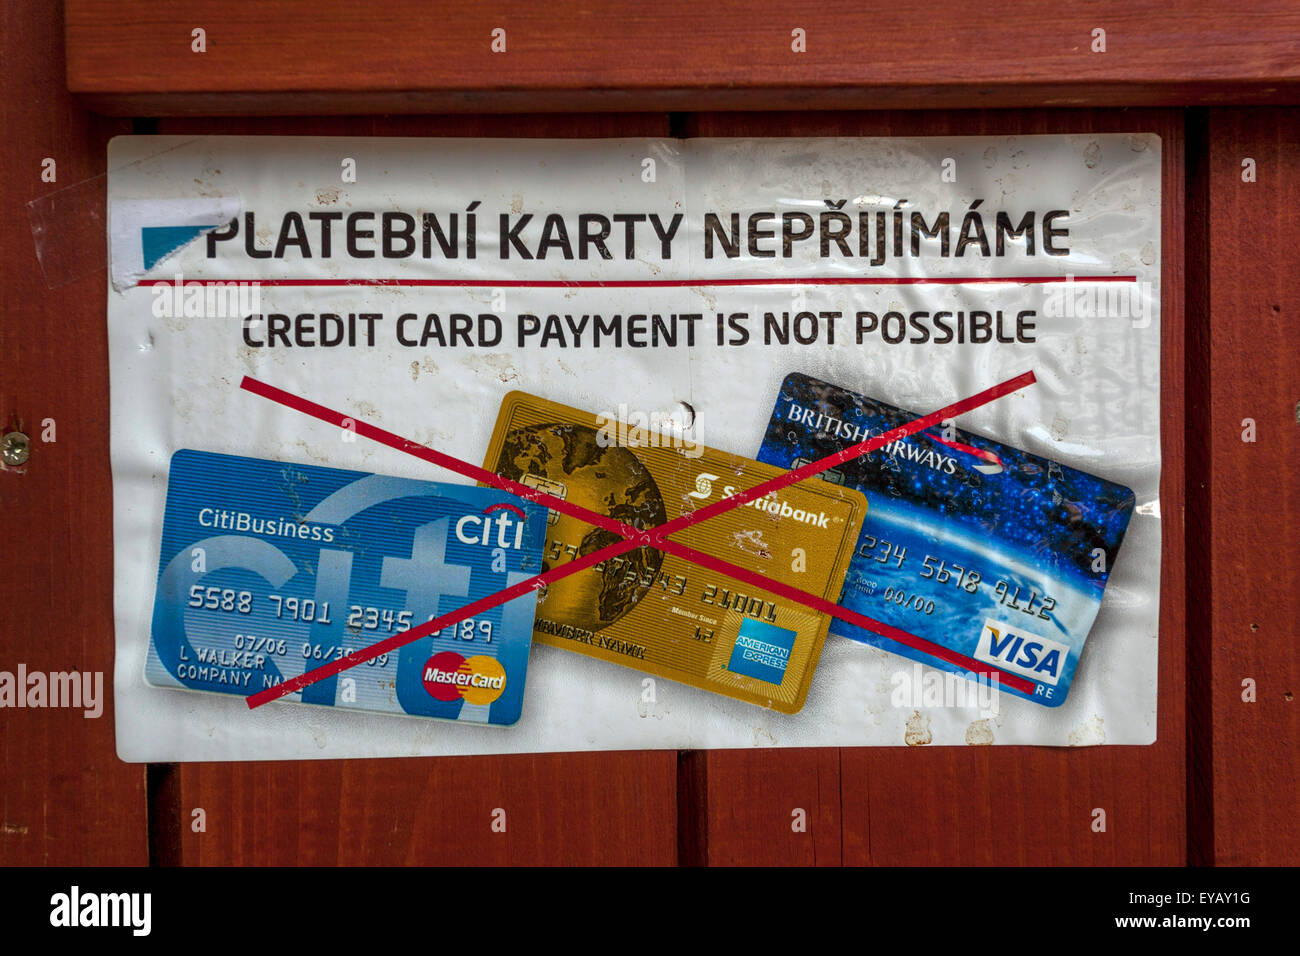 Credit Card payment is not possible, Prague, Czech Republic Stock Photo